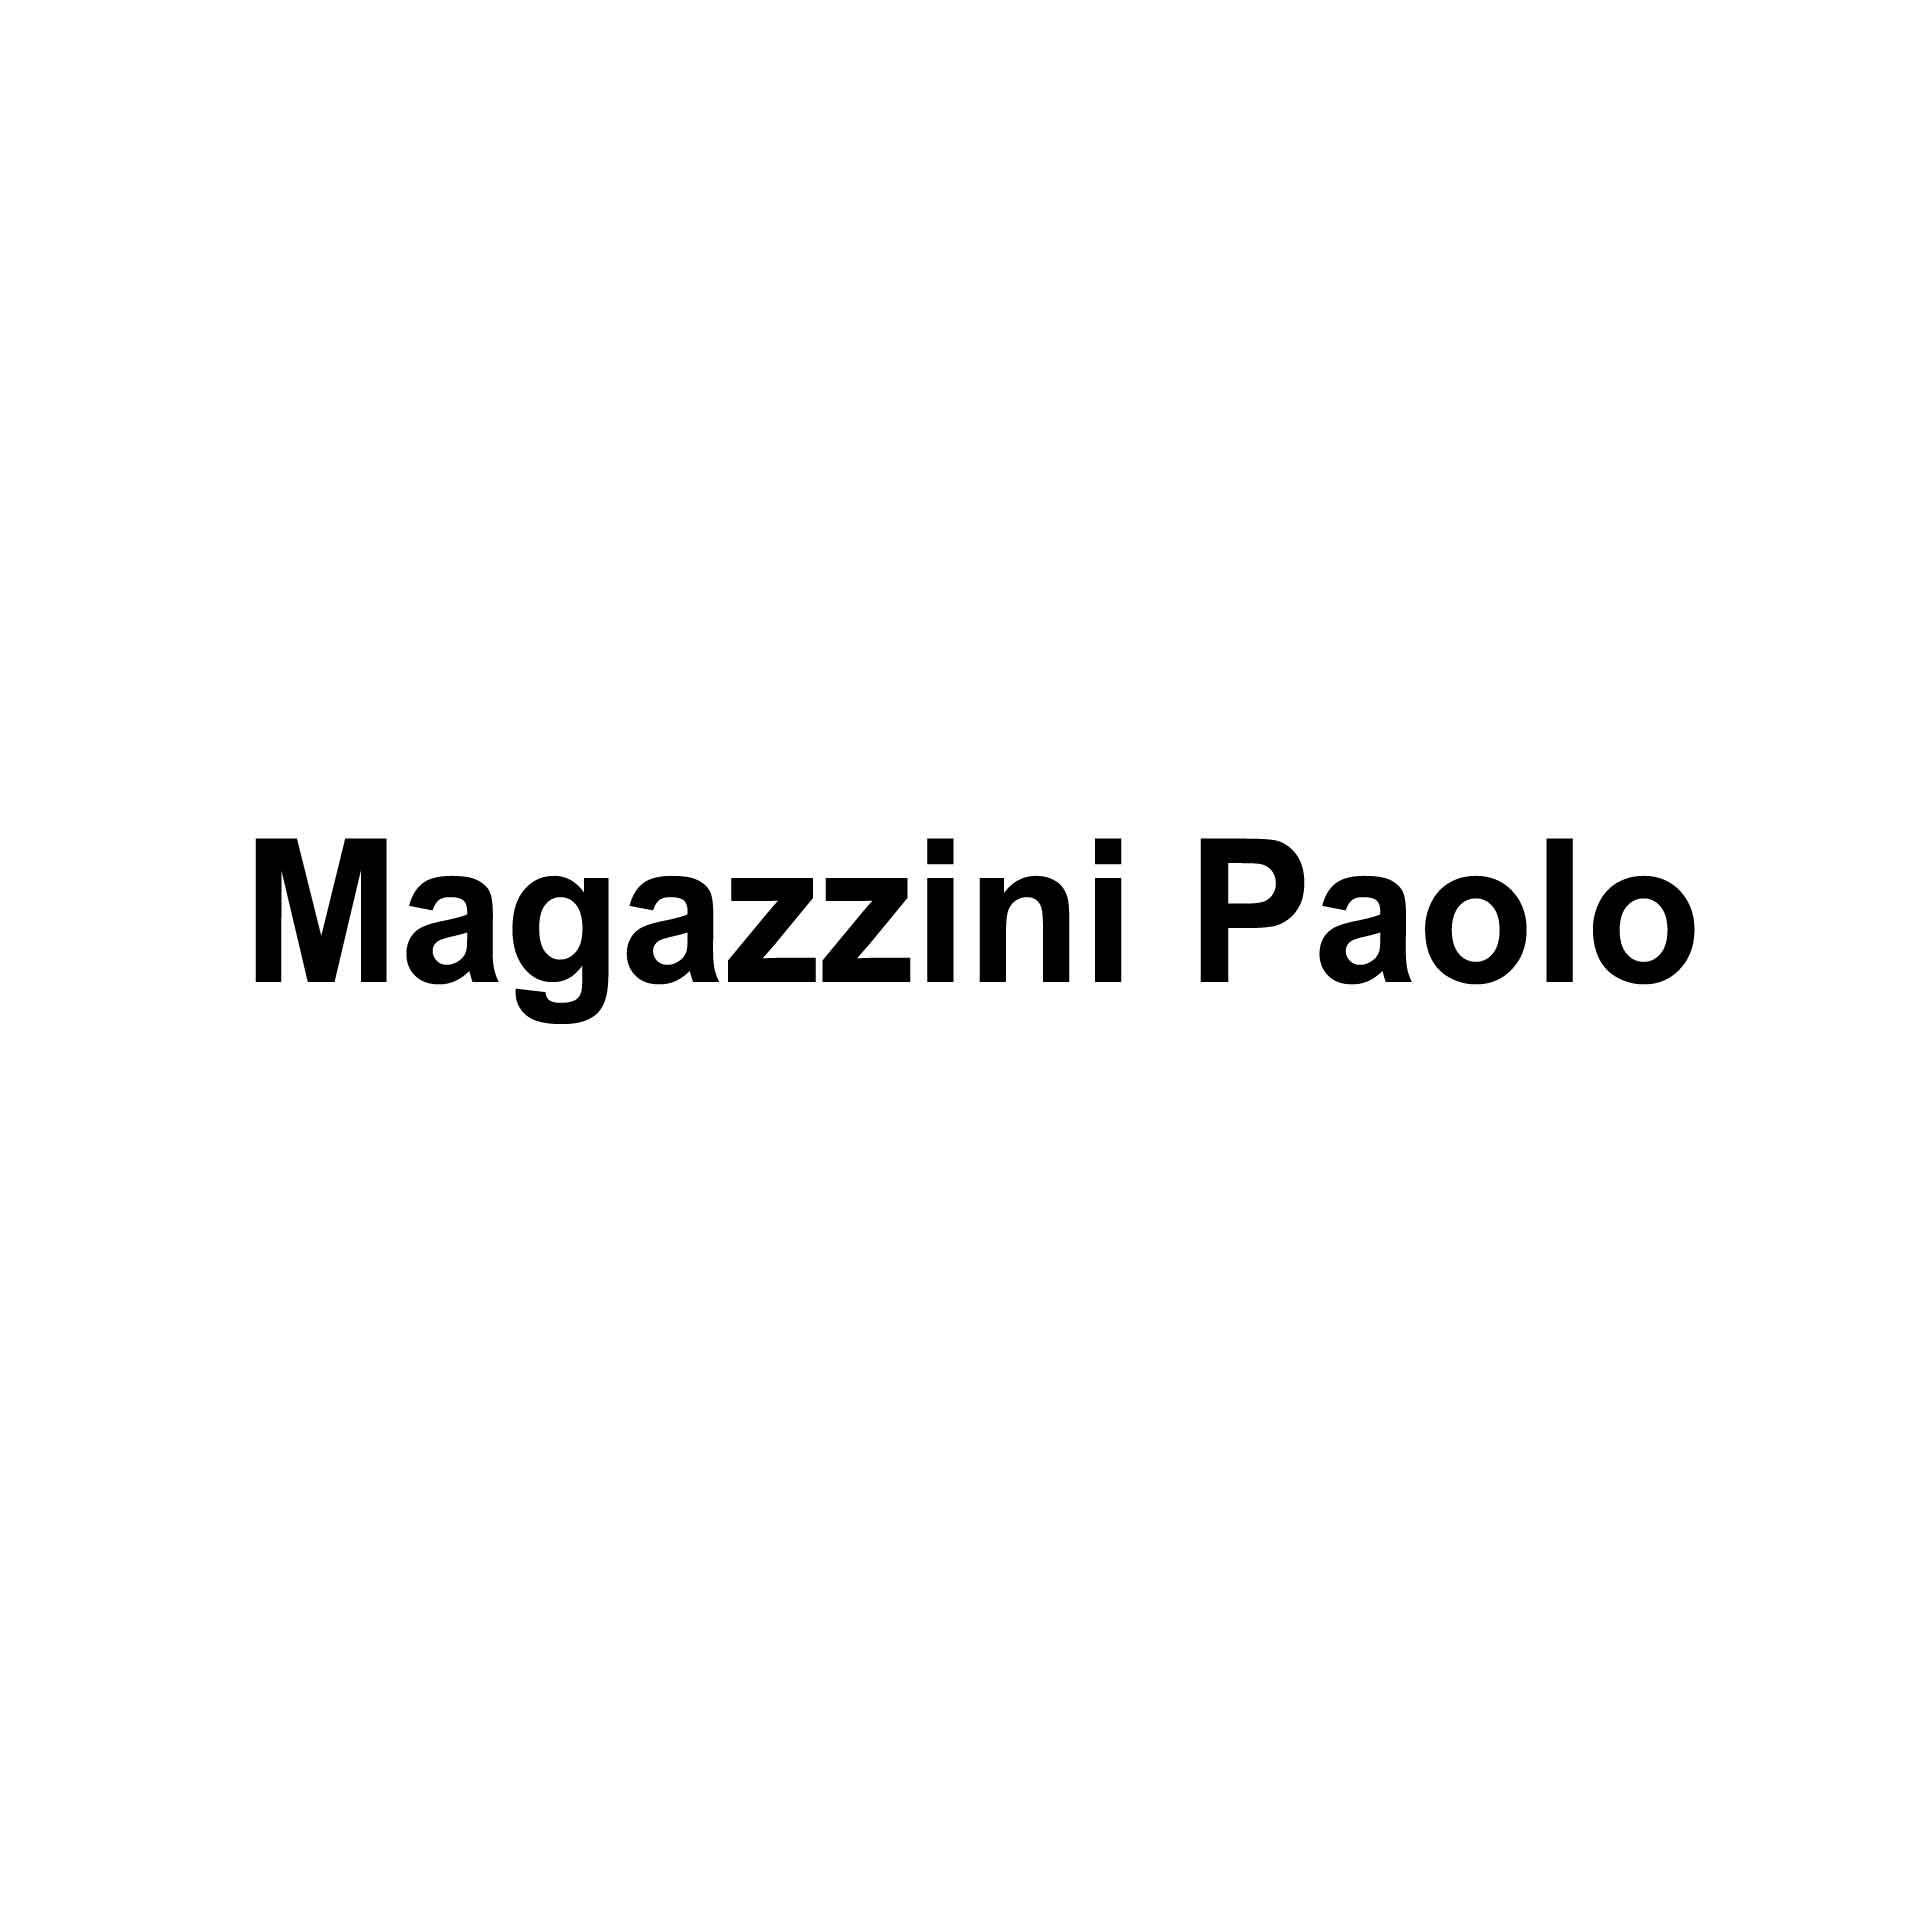 Magazzini Paolo